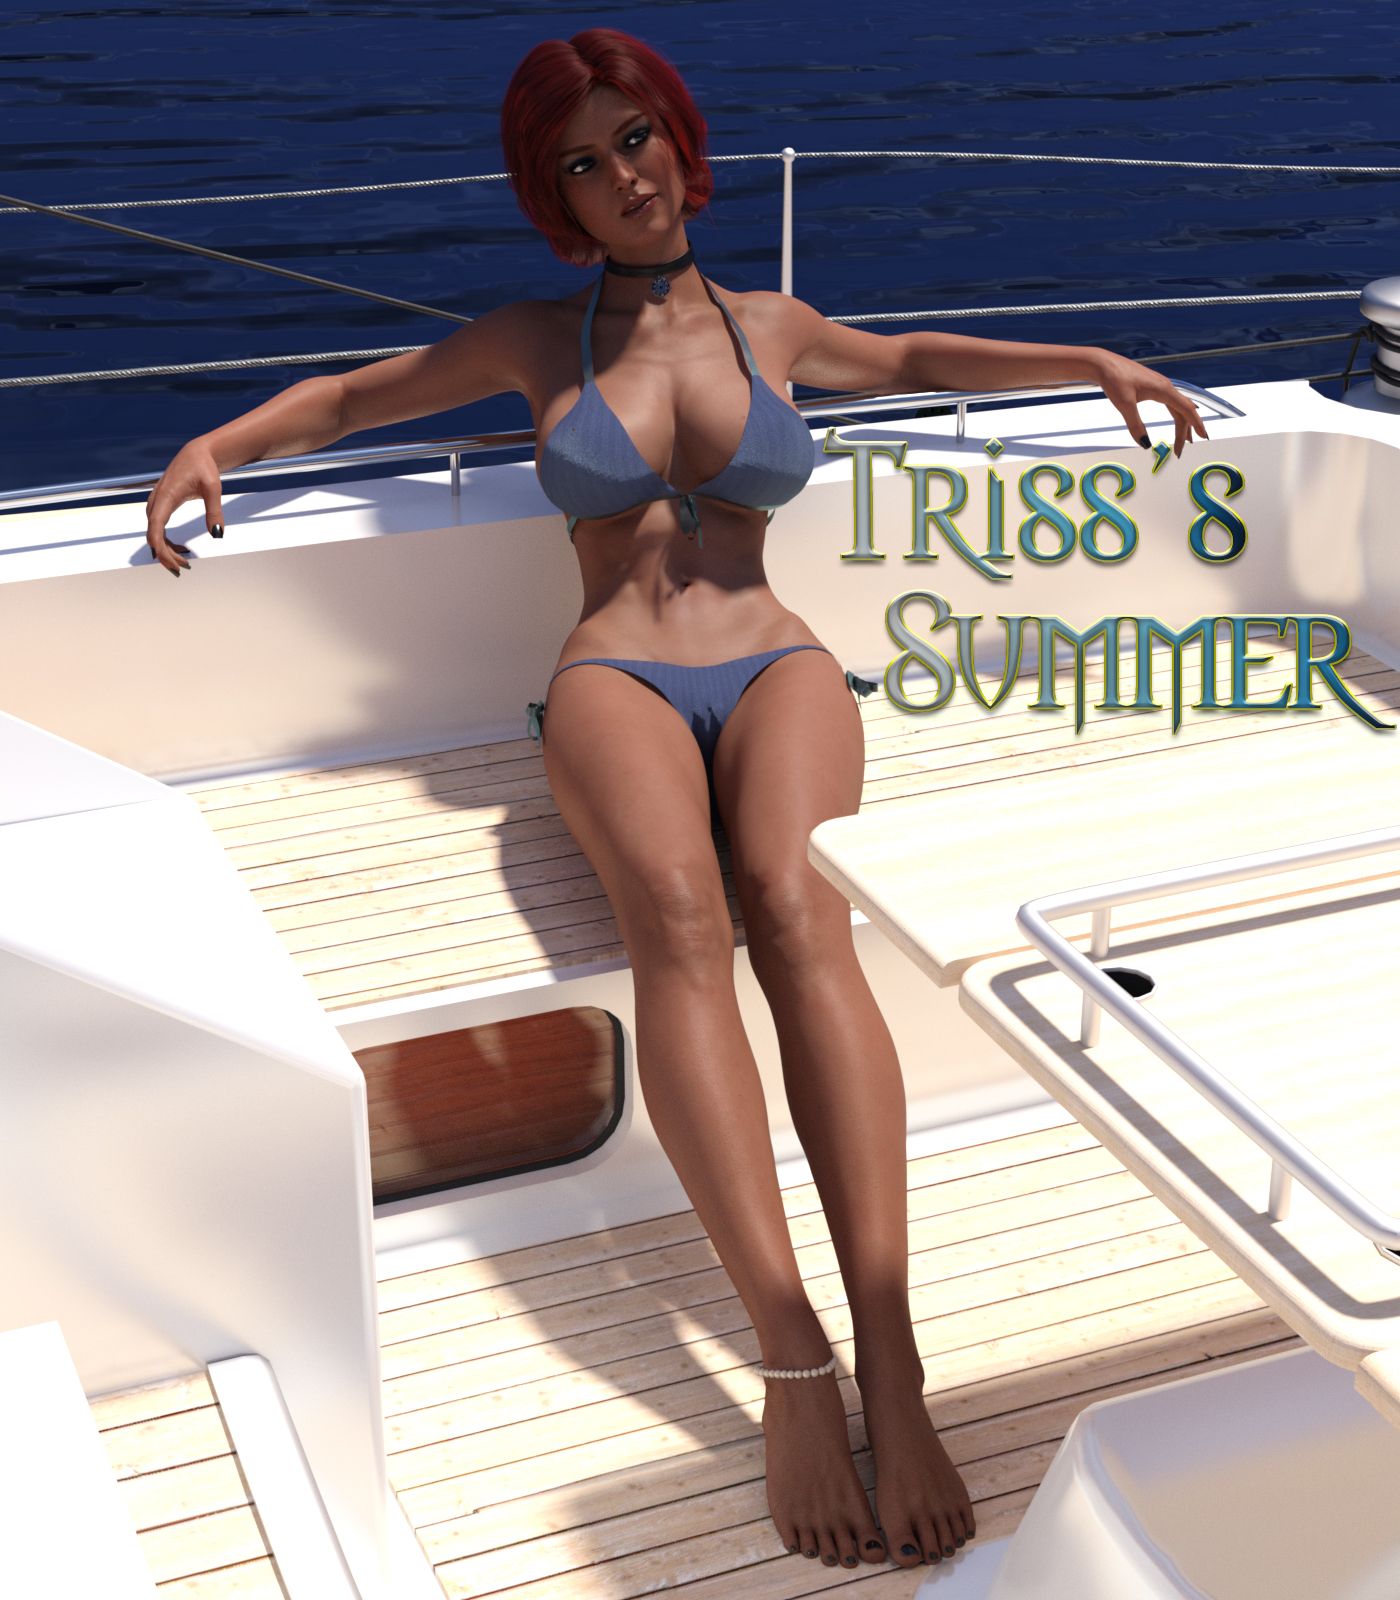 Eclesi4stik – Triss’s Summer Complete!